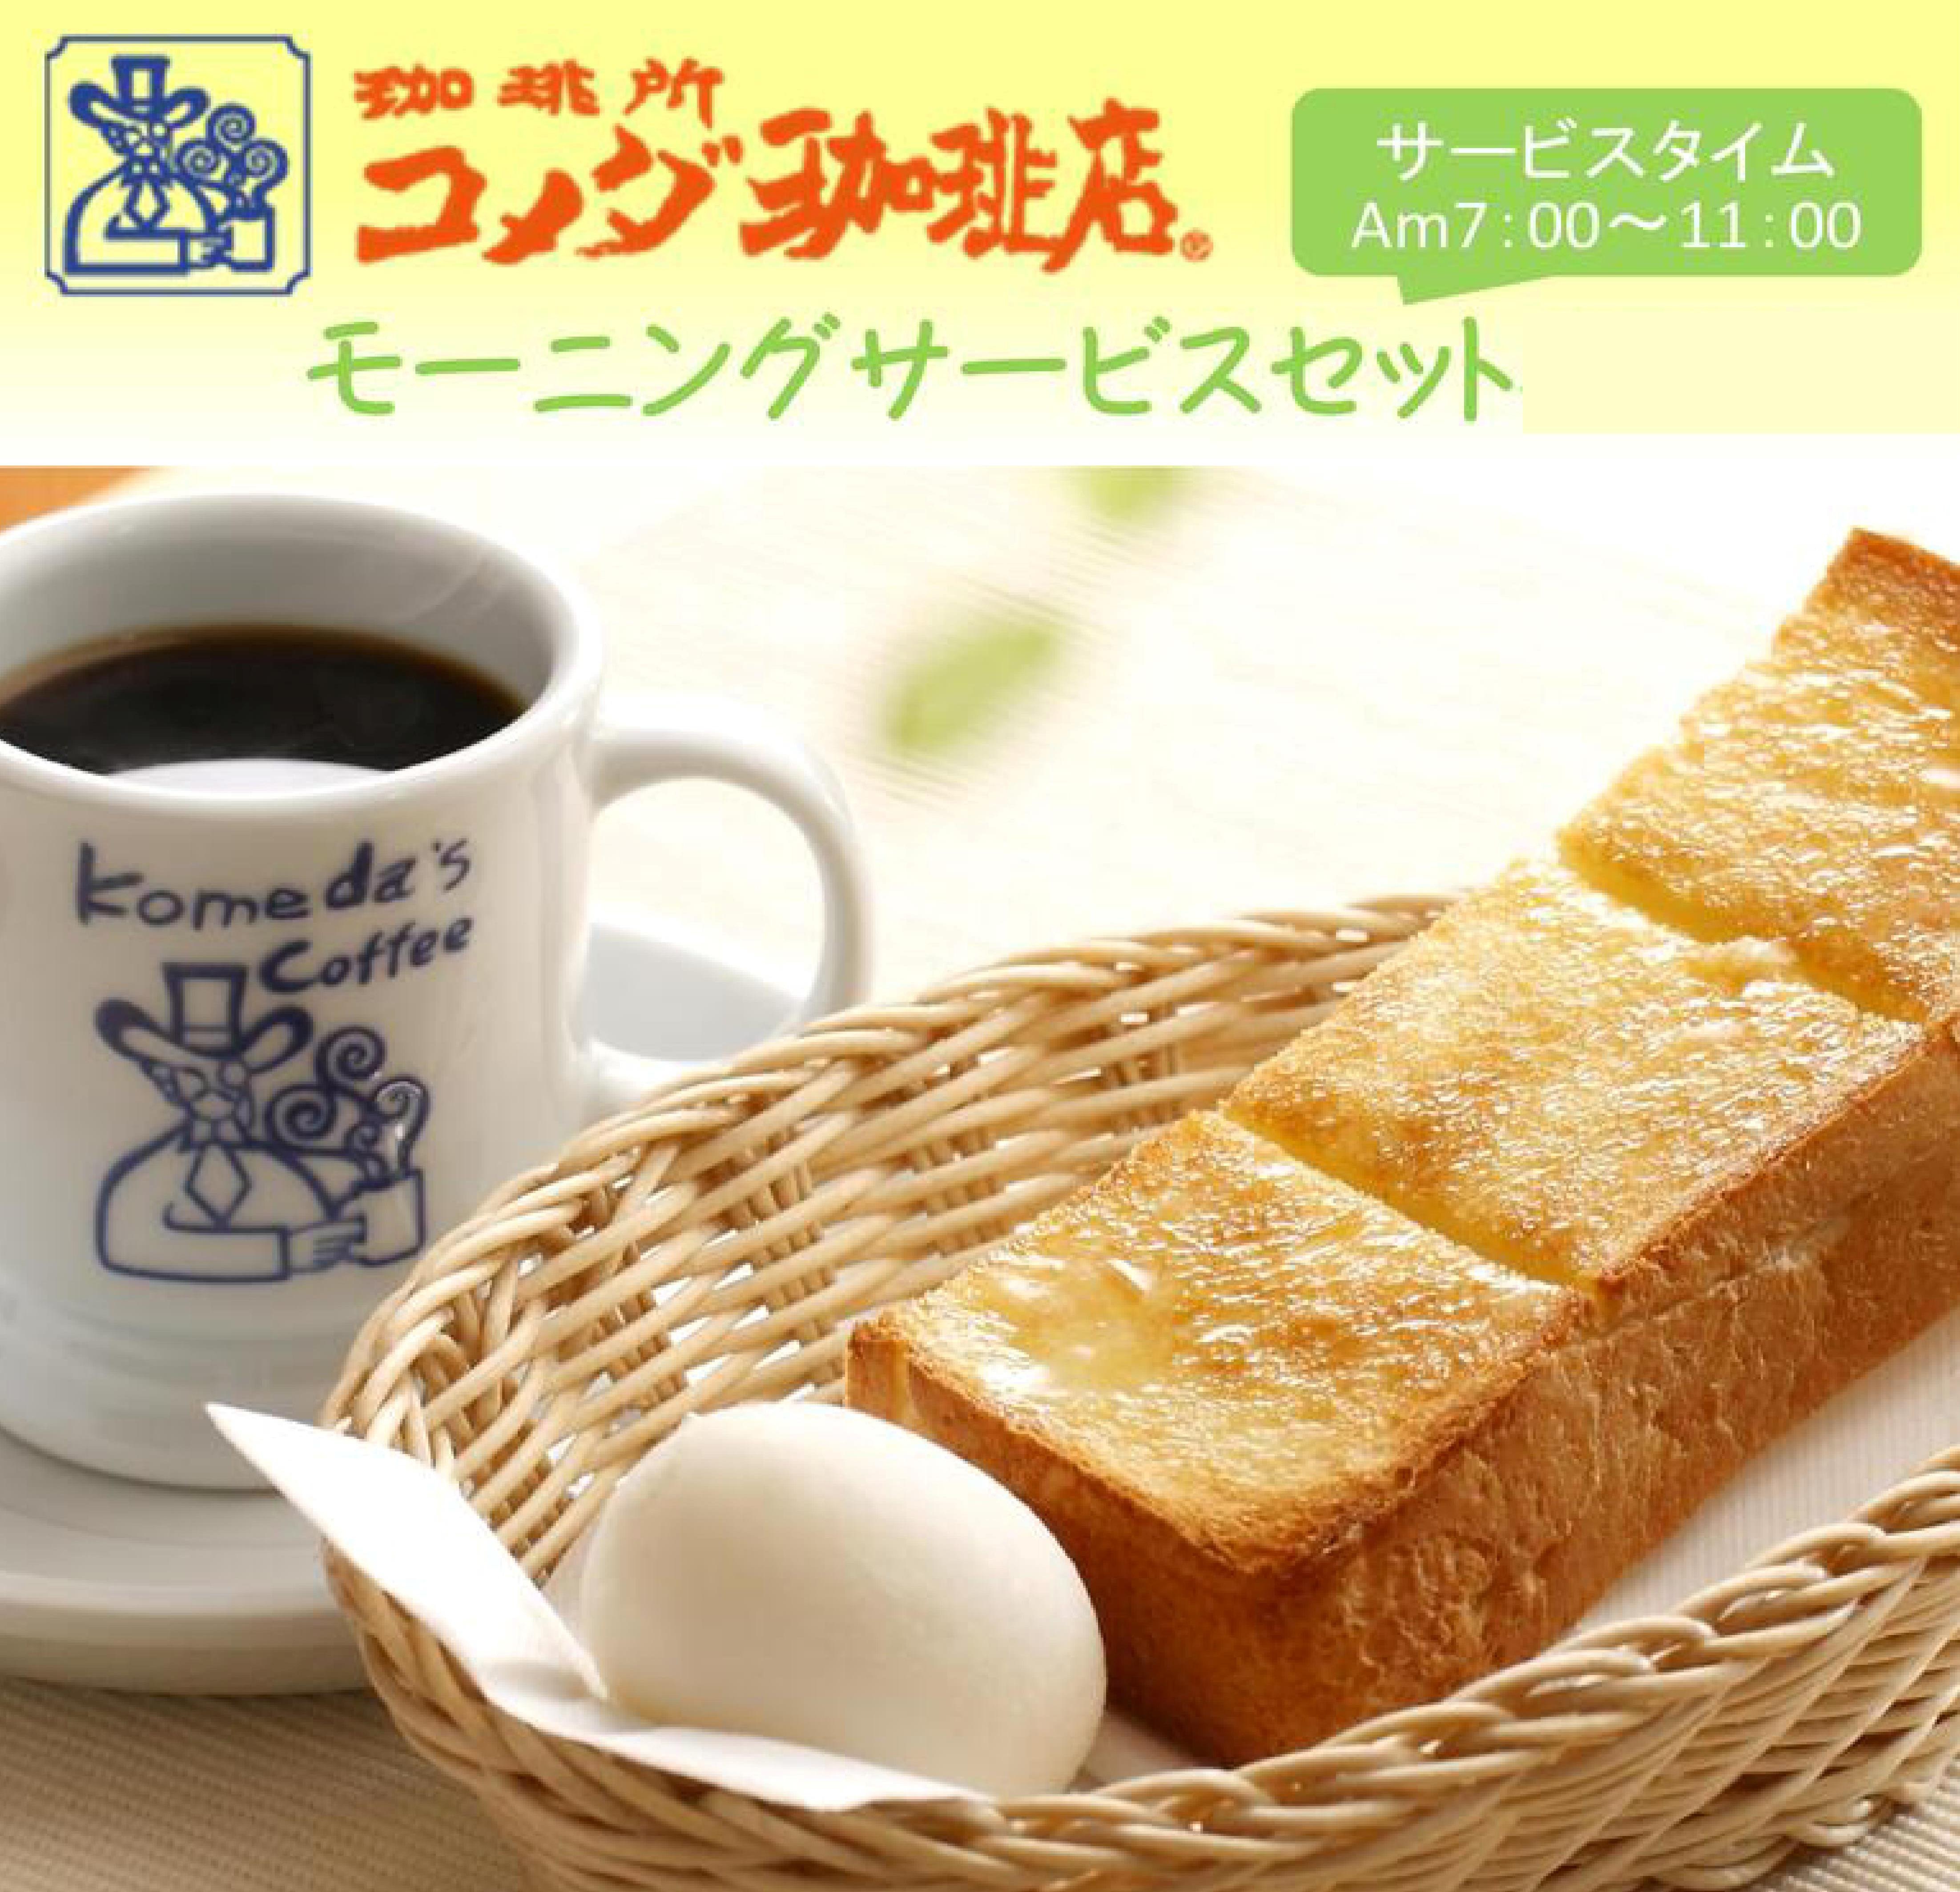 Komeda咖啡厅早间服务